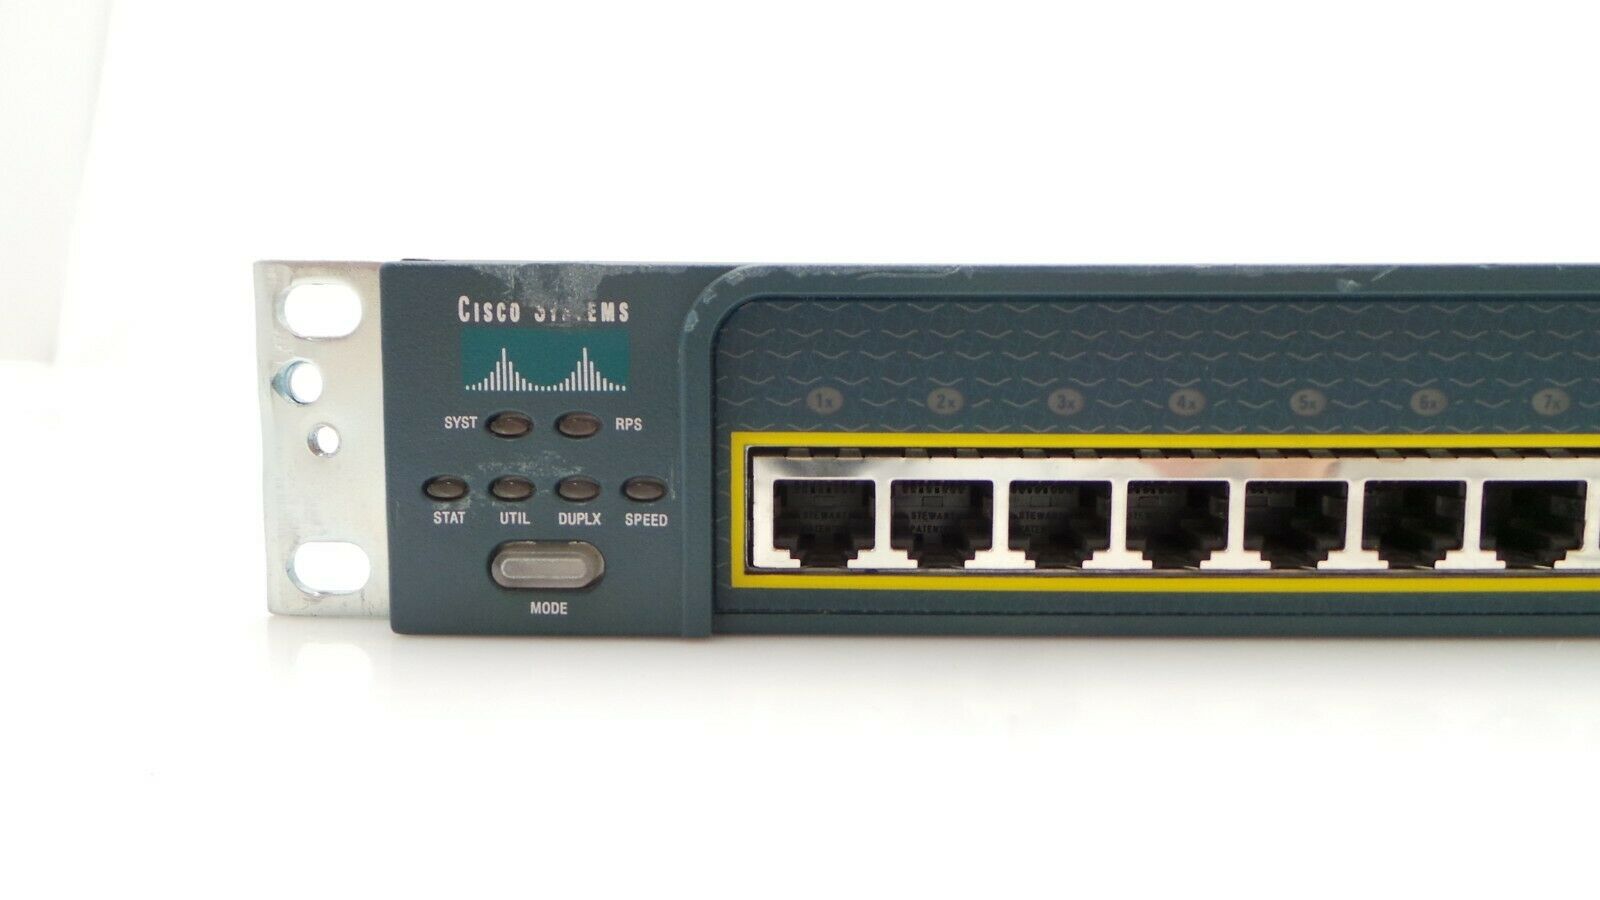 Cisco WS-C2950T-24 Catalyst 2950 24-Port Gigabit Ethernet 1U Network Switch, Used